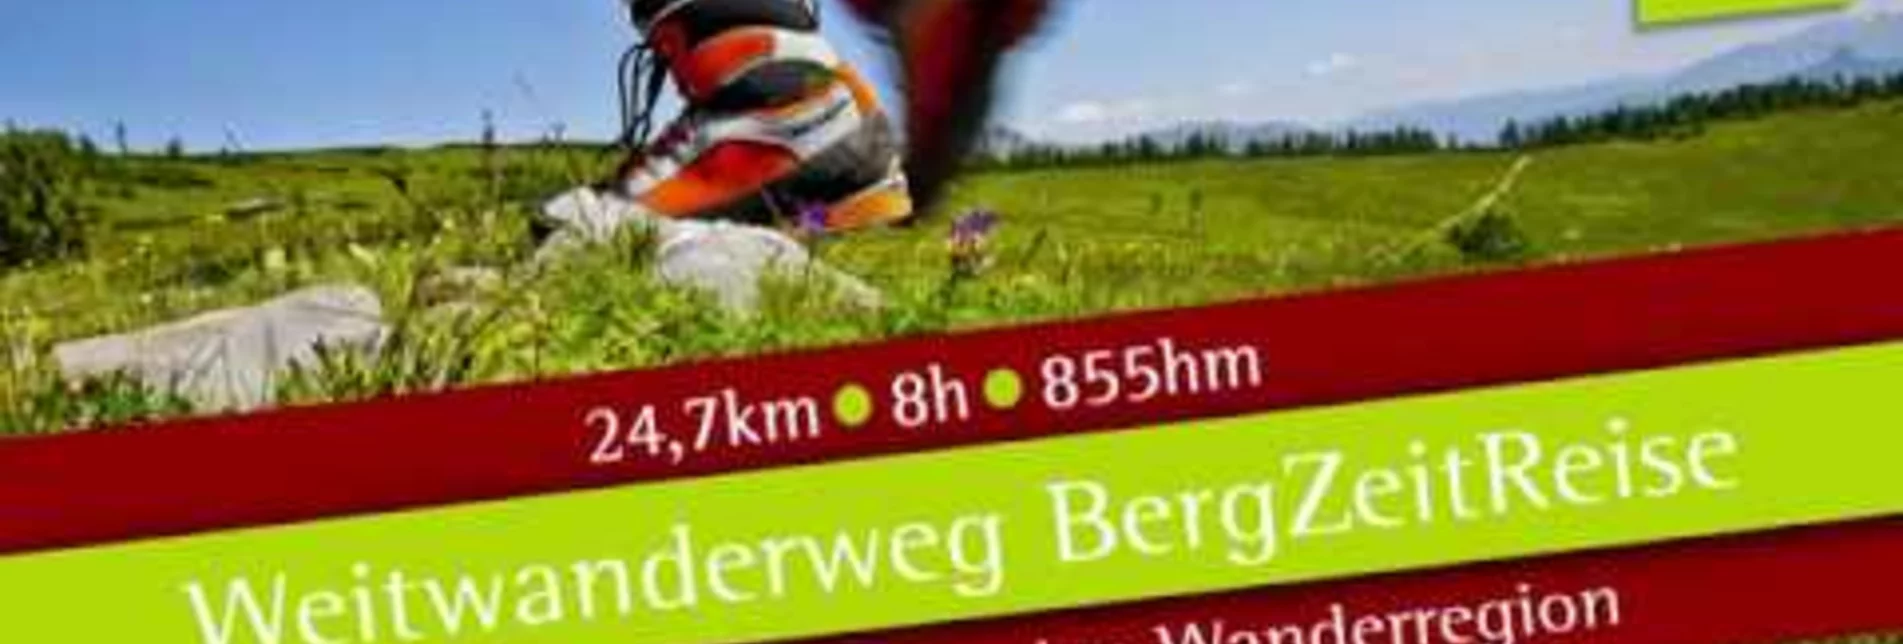 Fernwanderweg Etappe 12: BergZeitReise Kindberg - Pogusch - Kapfenberg - Touren-Impression #1 | © Erlebnisregion Hochsteiermark